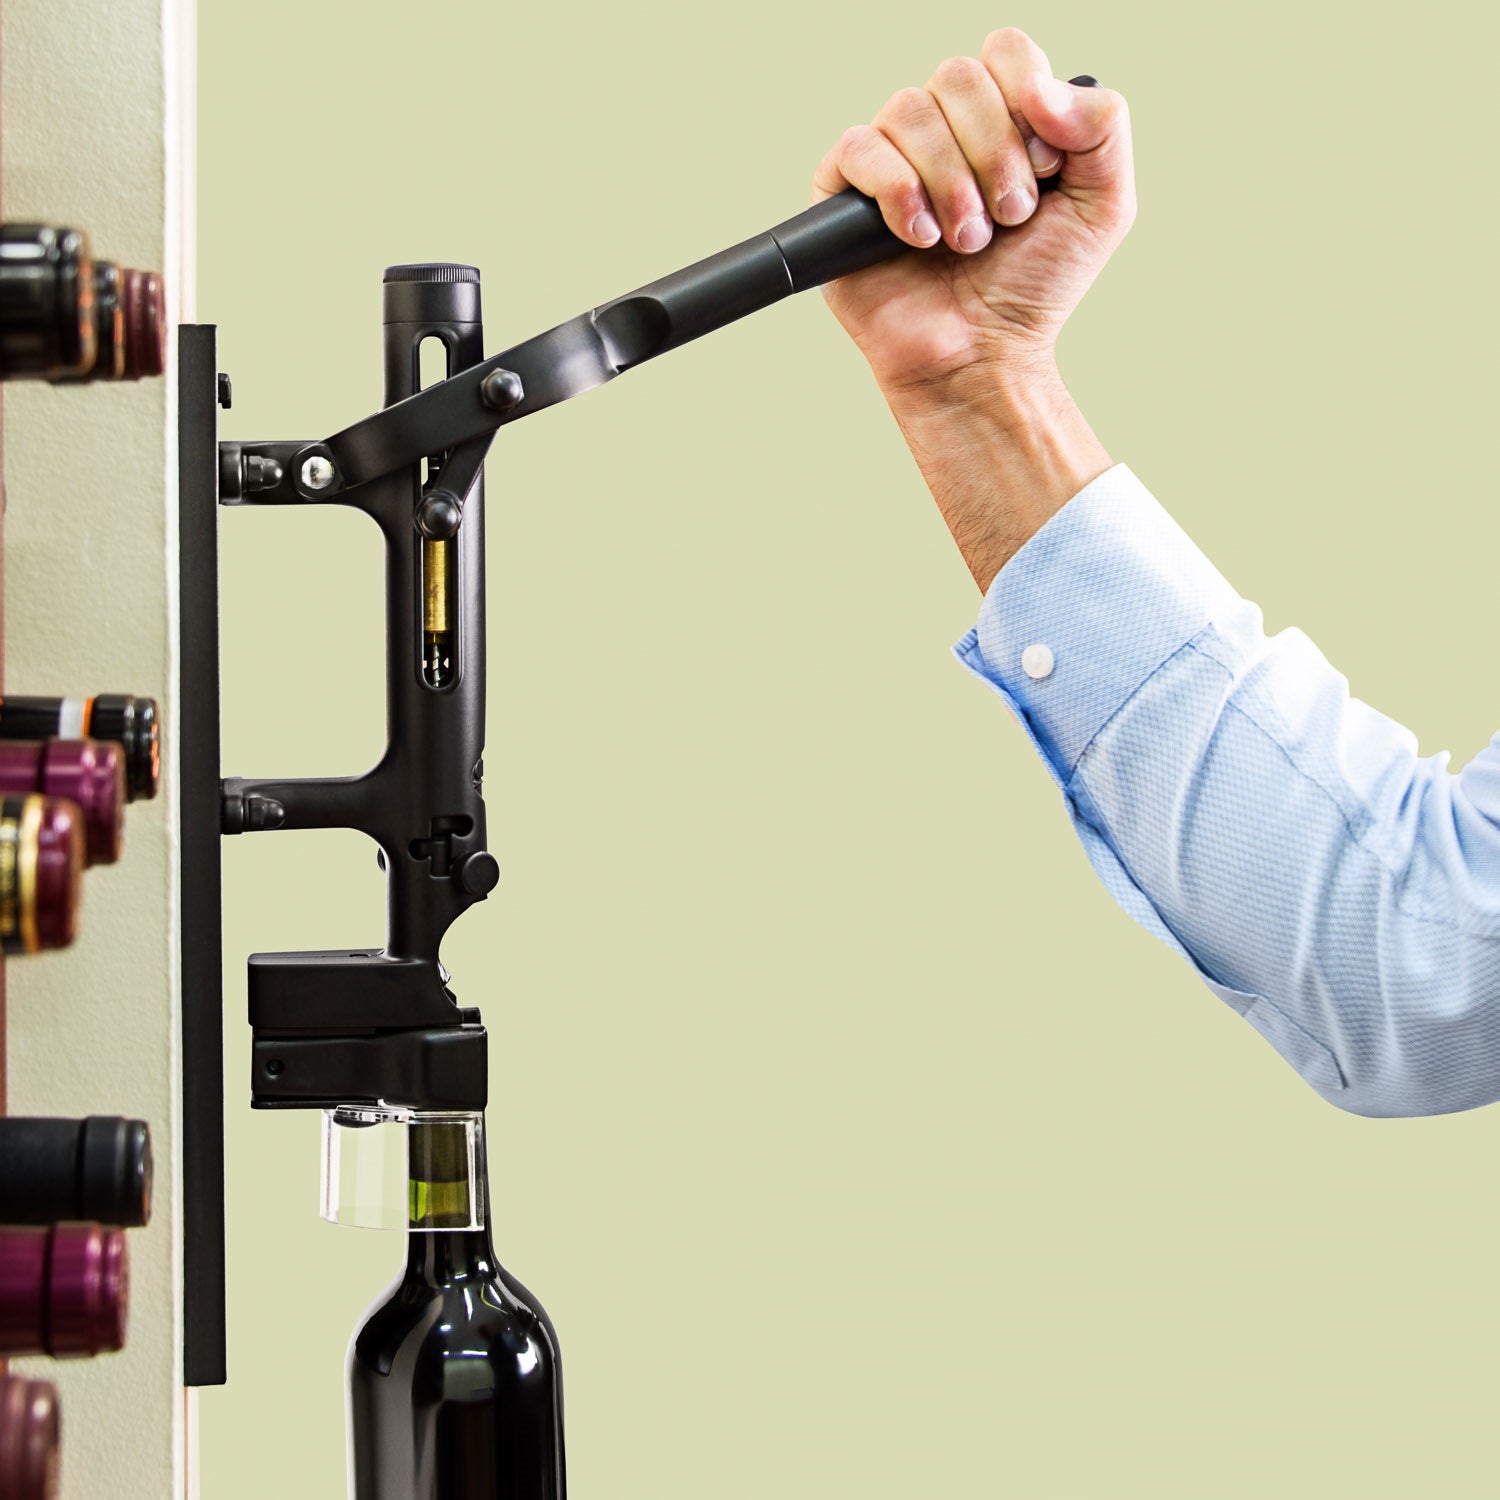 BOJ Professional Wine Opener Black SapeleBacked Wall Mounted Corkscrew 10455 wineopeners.shop